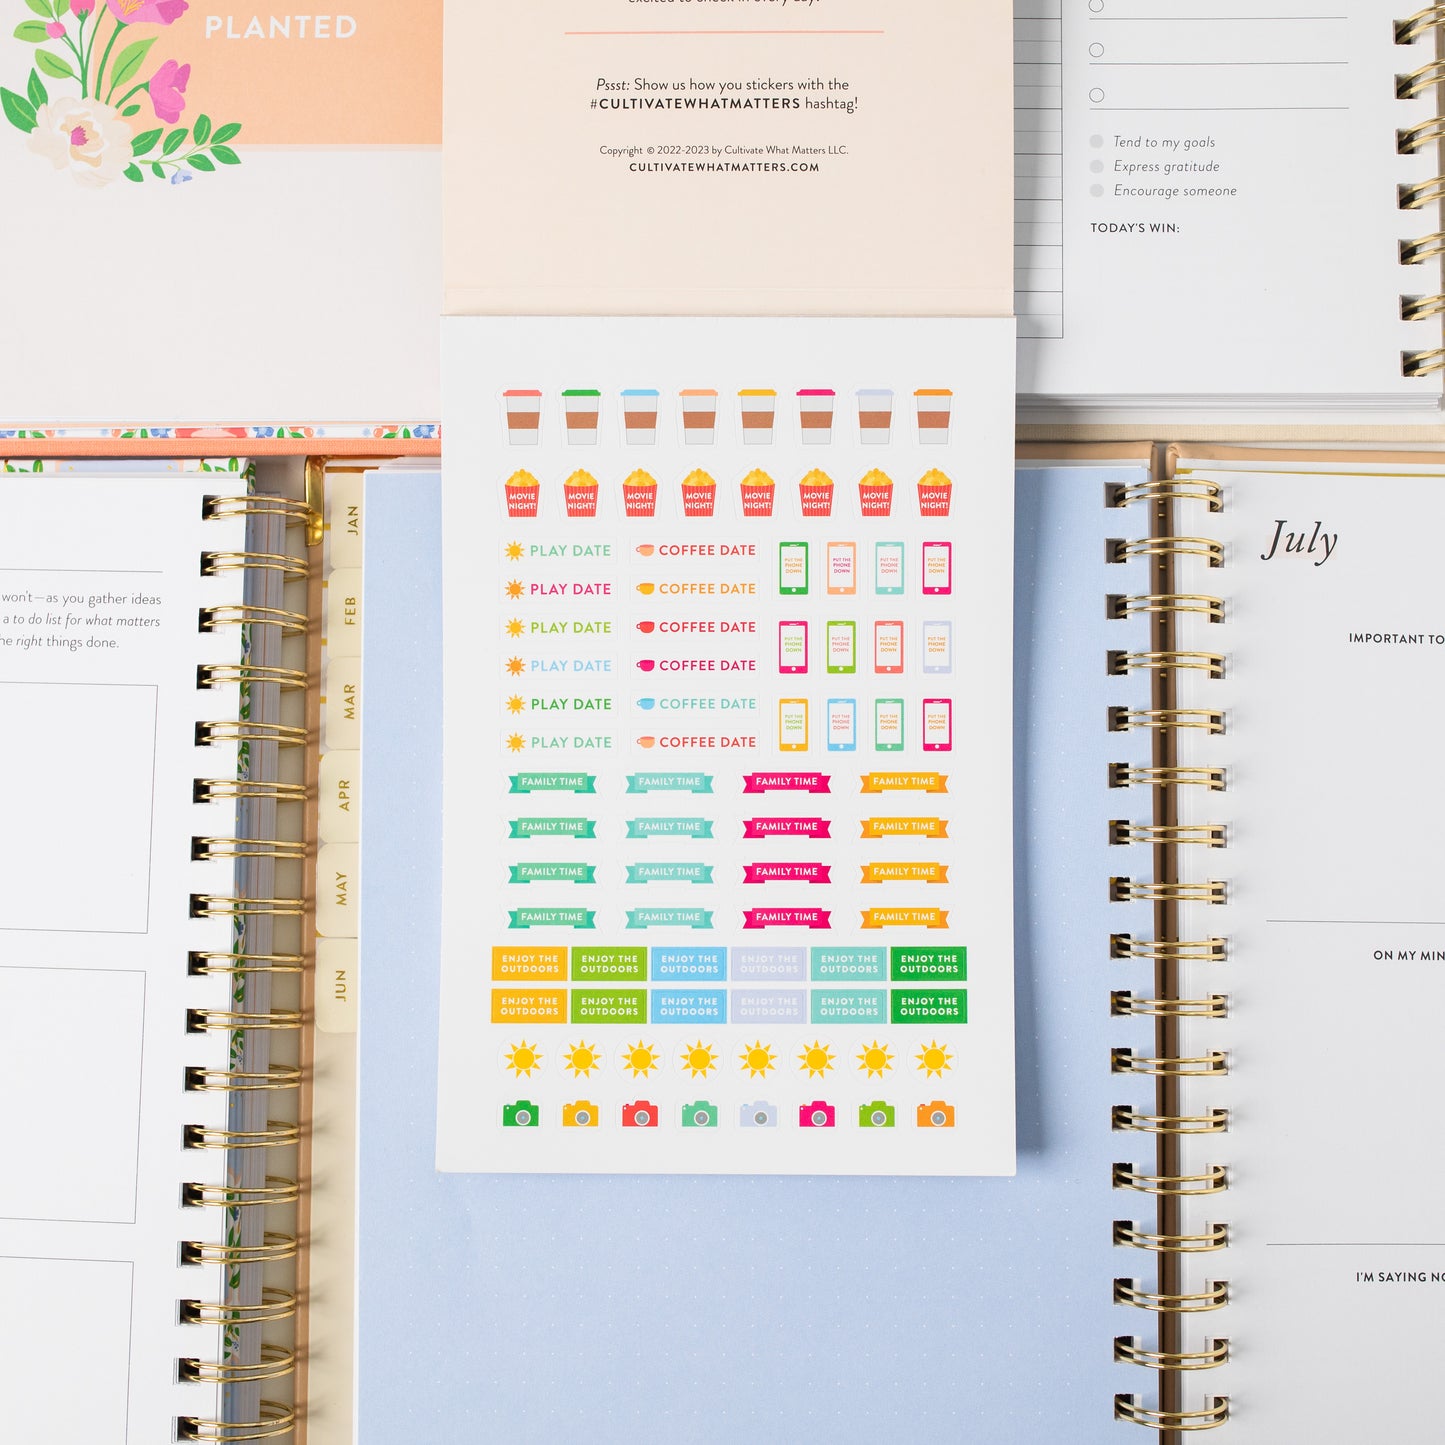 NEW Planner Sticker Book – Cultivate